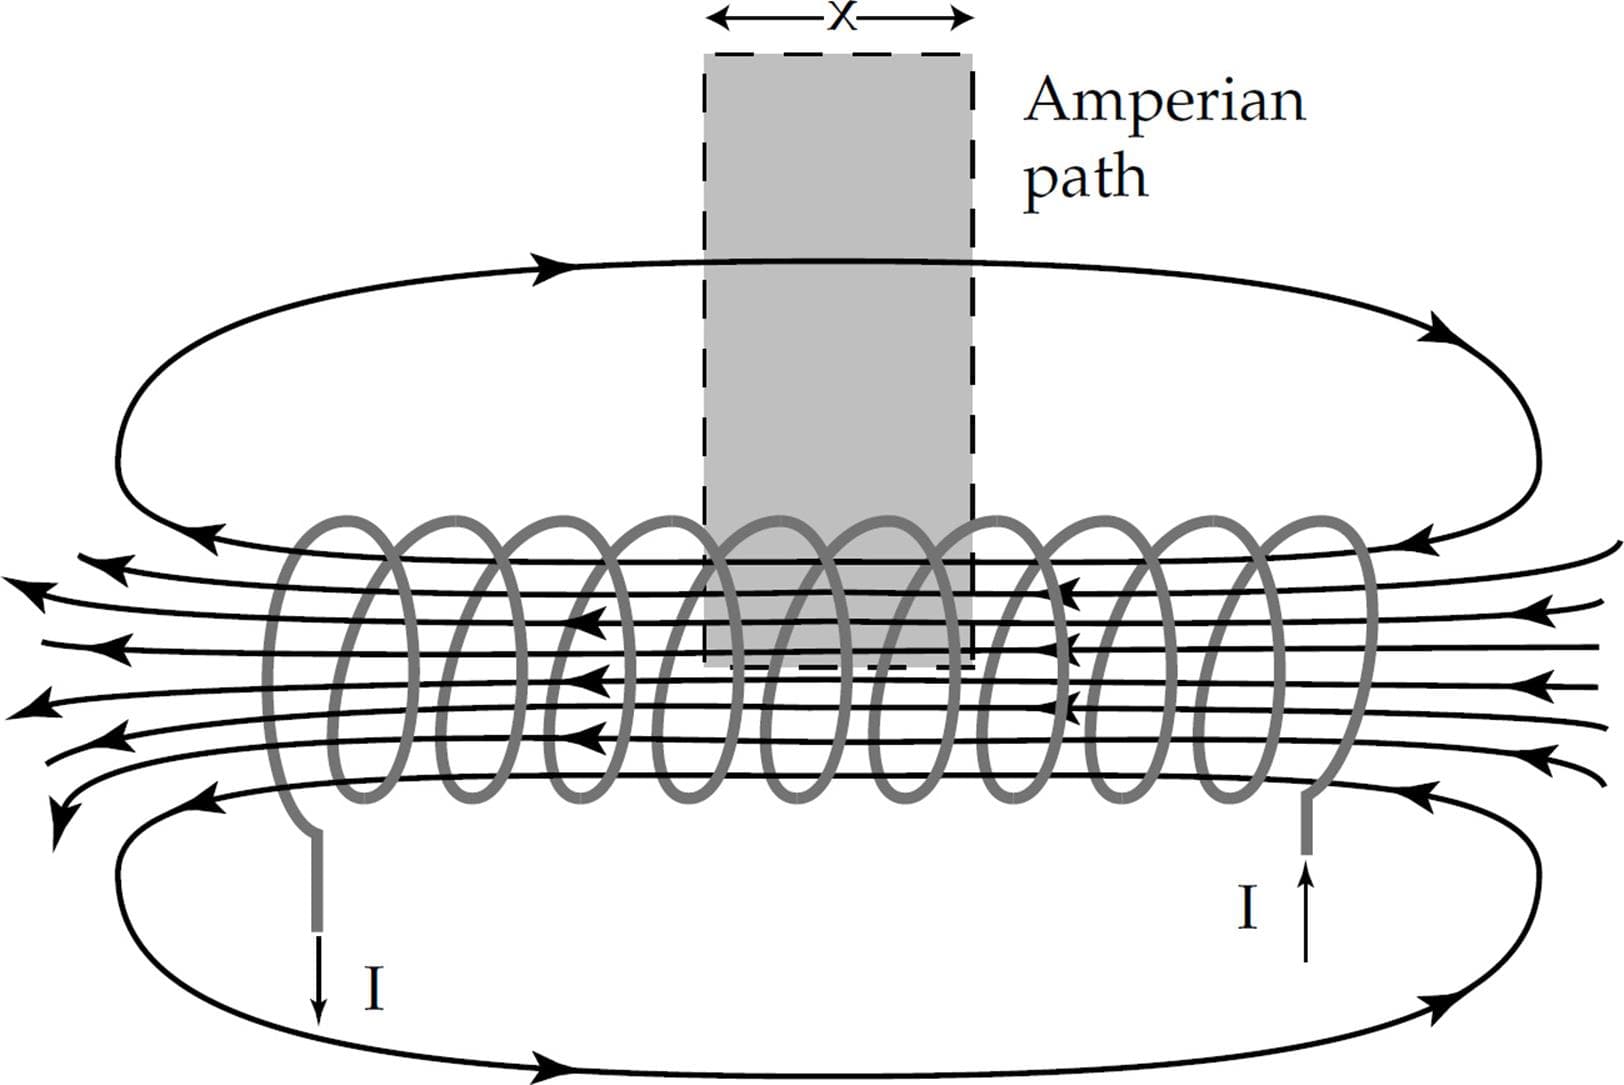 | Amperian
path
100800000
I
